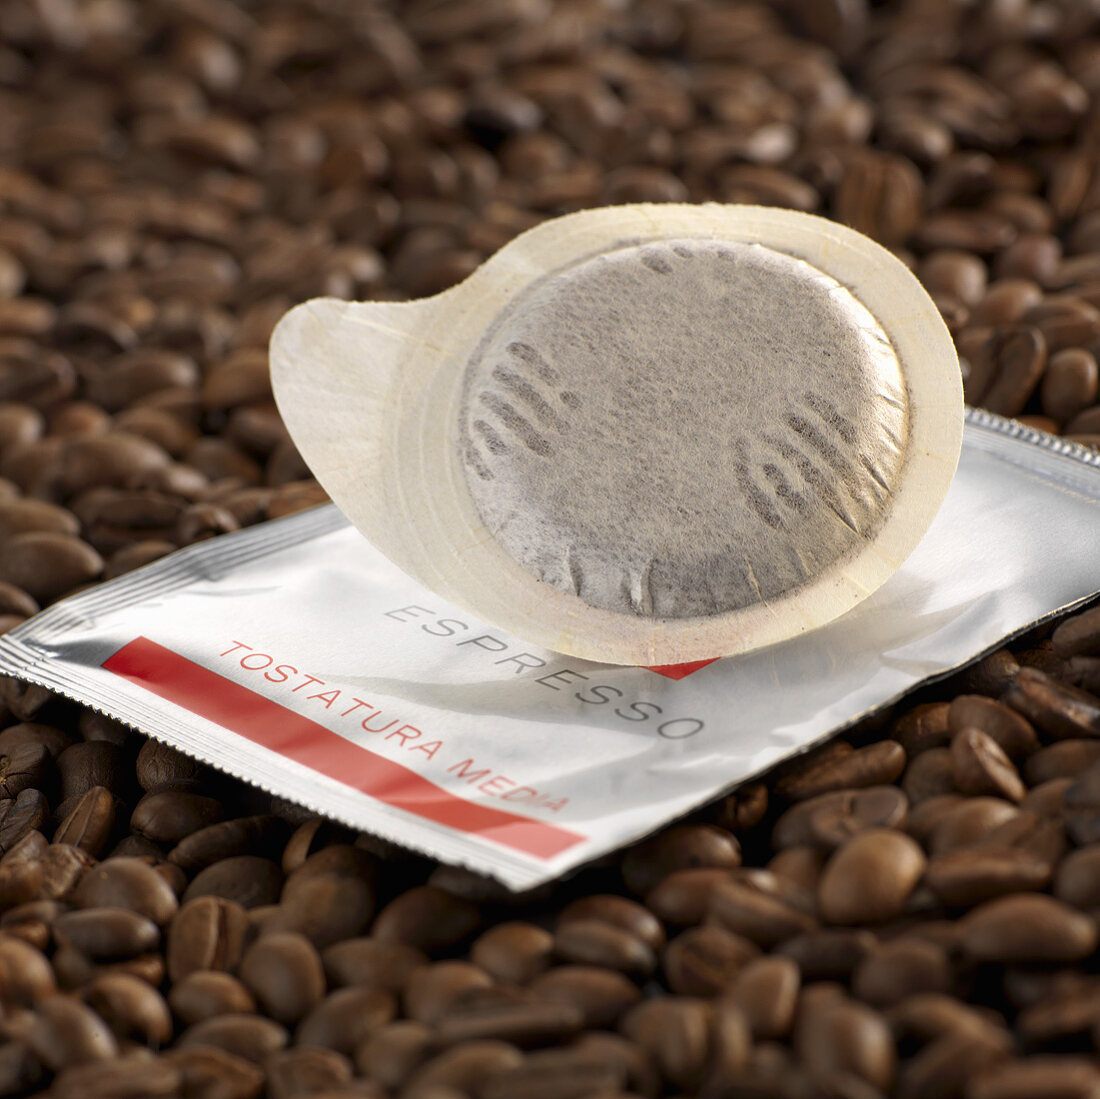 Espresso pod on coffee beans